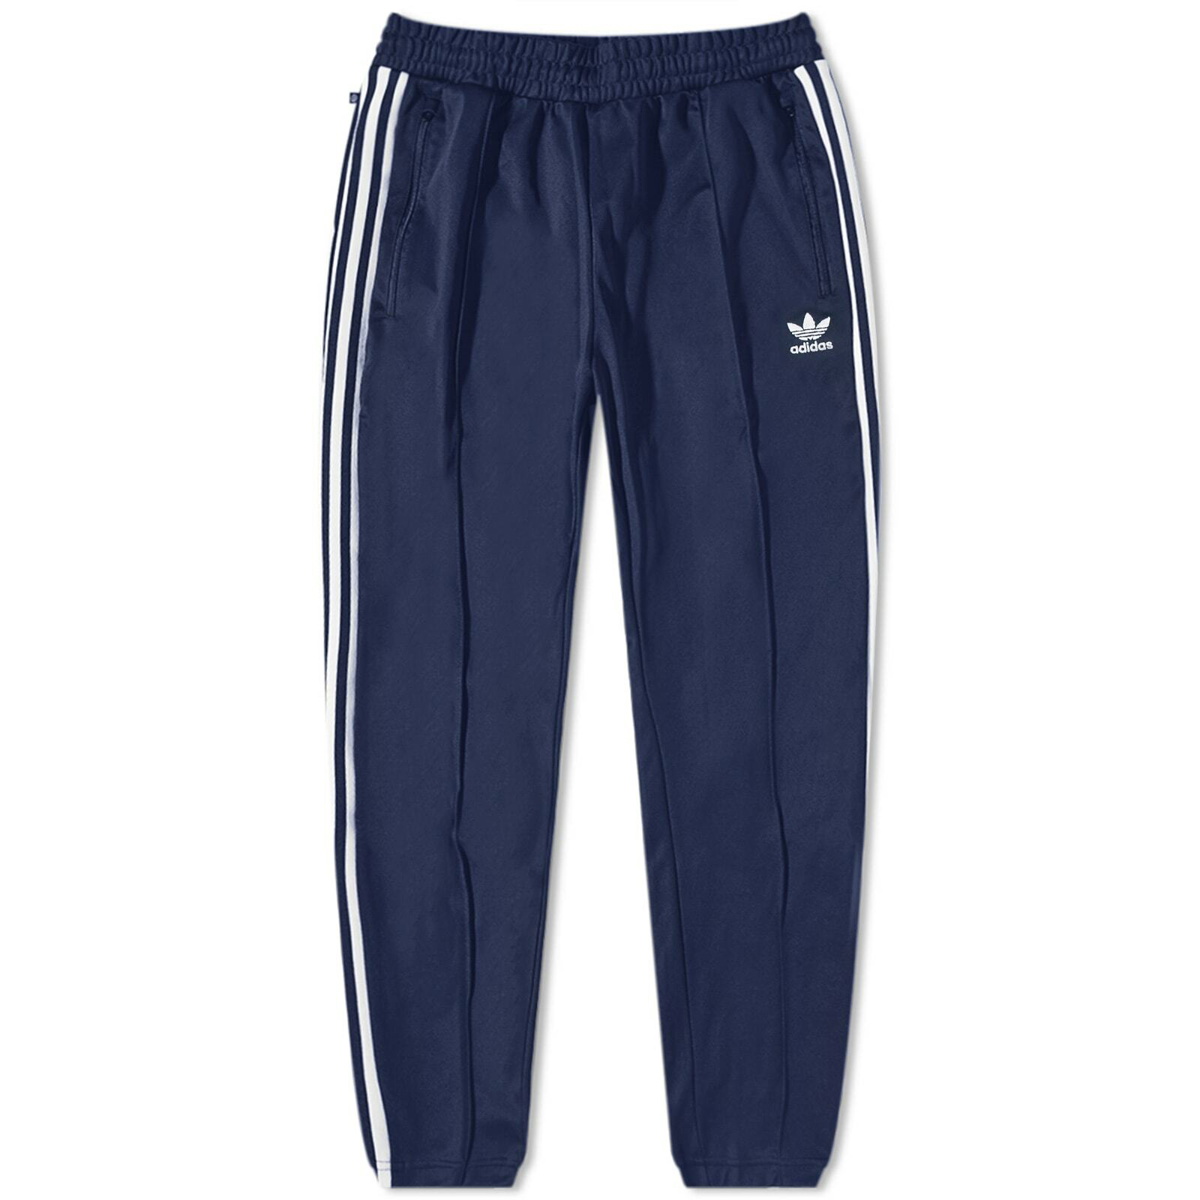 adidas Slim Fit Fleece 3-Stripes Sweat Pants, Arctic Night, S